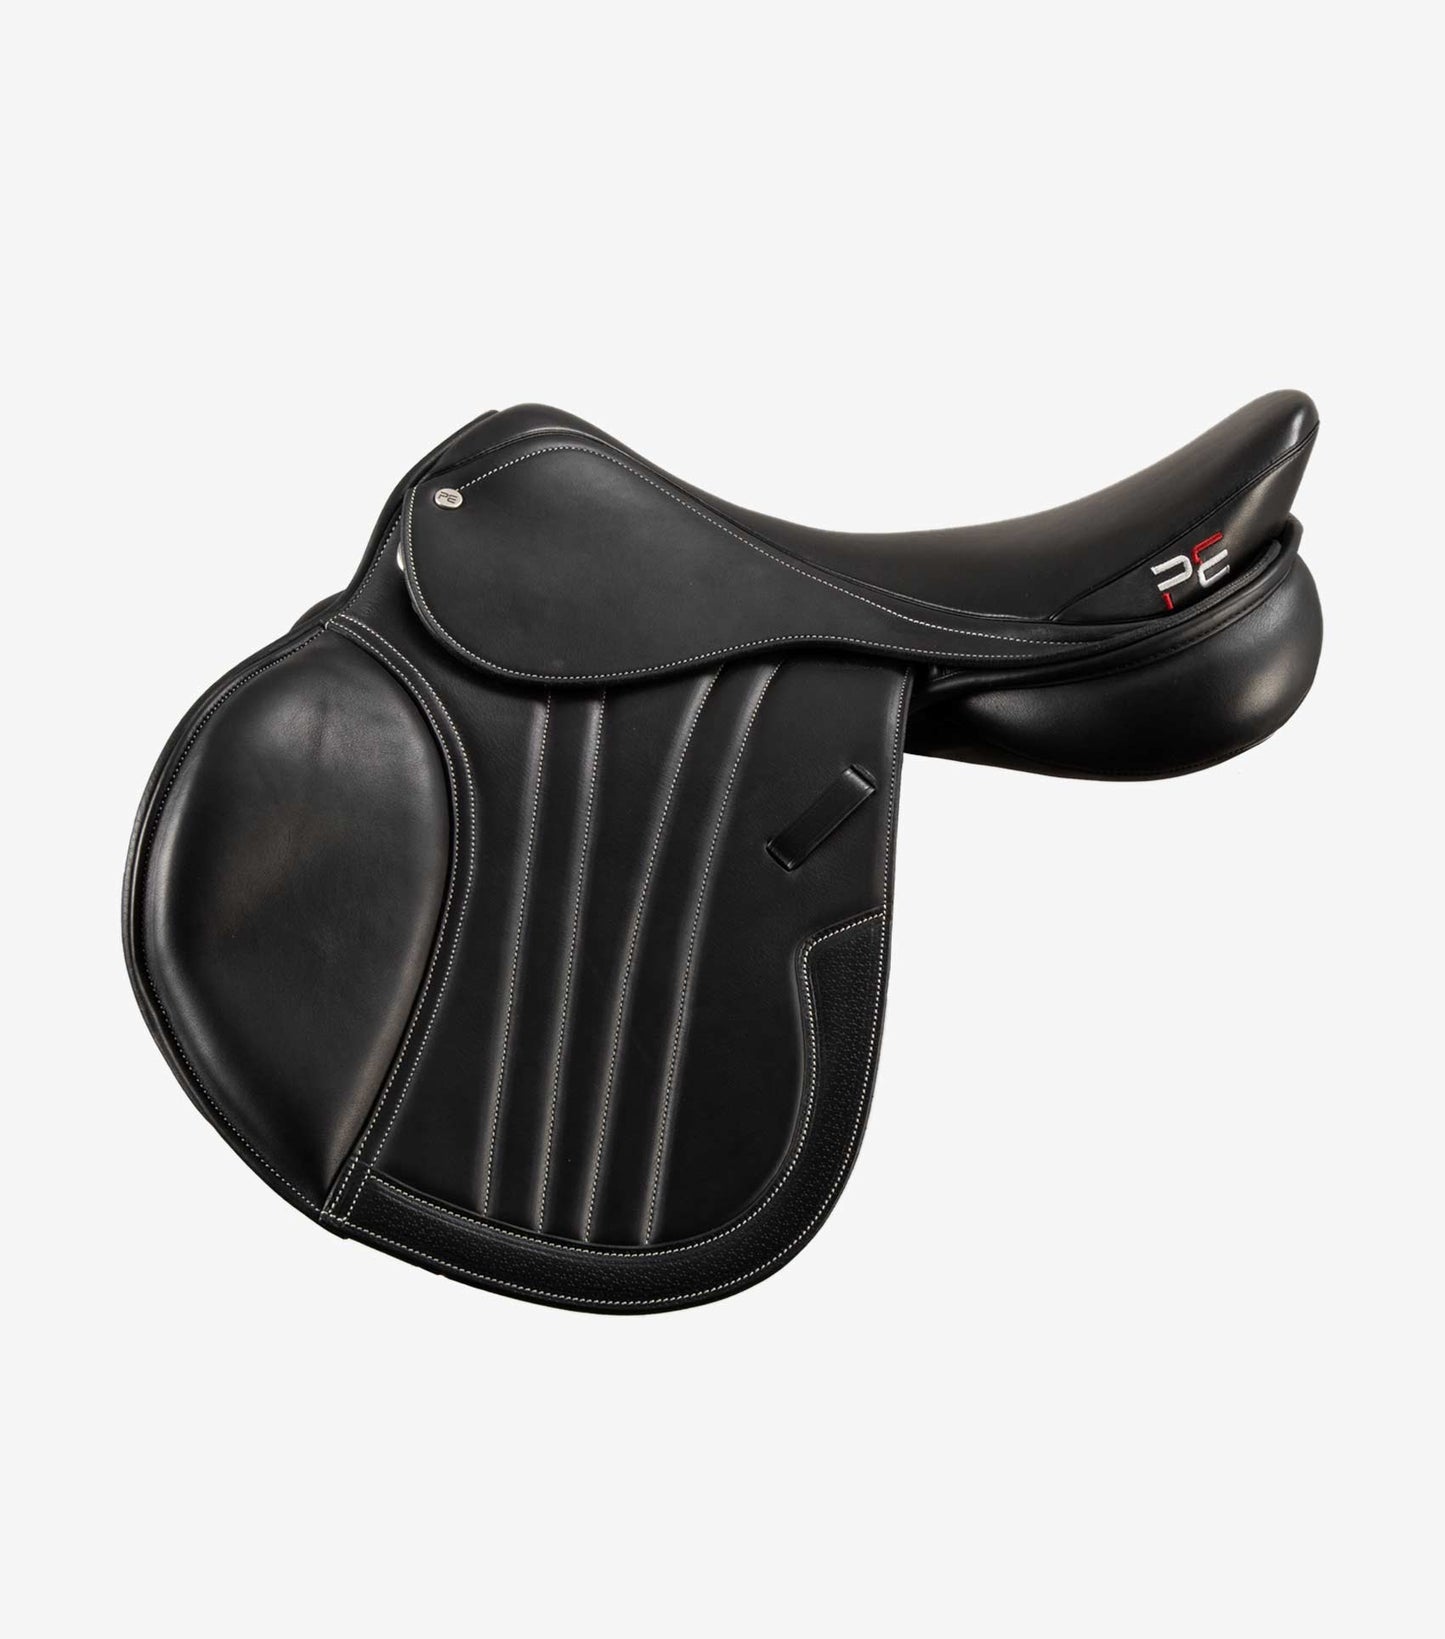 Premier Equine Chamonix Leather Close Contact Jump Saddle (Black)